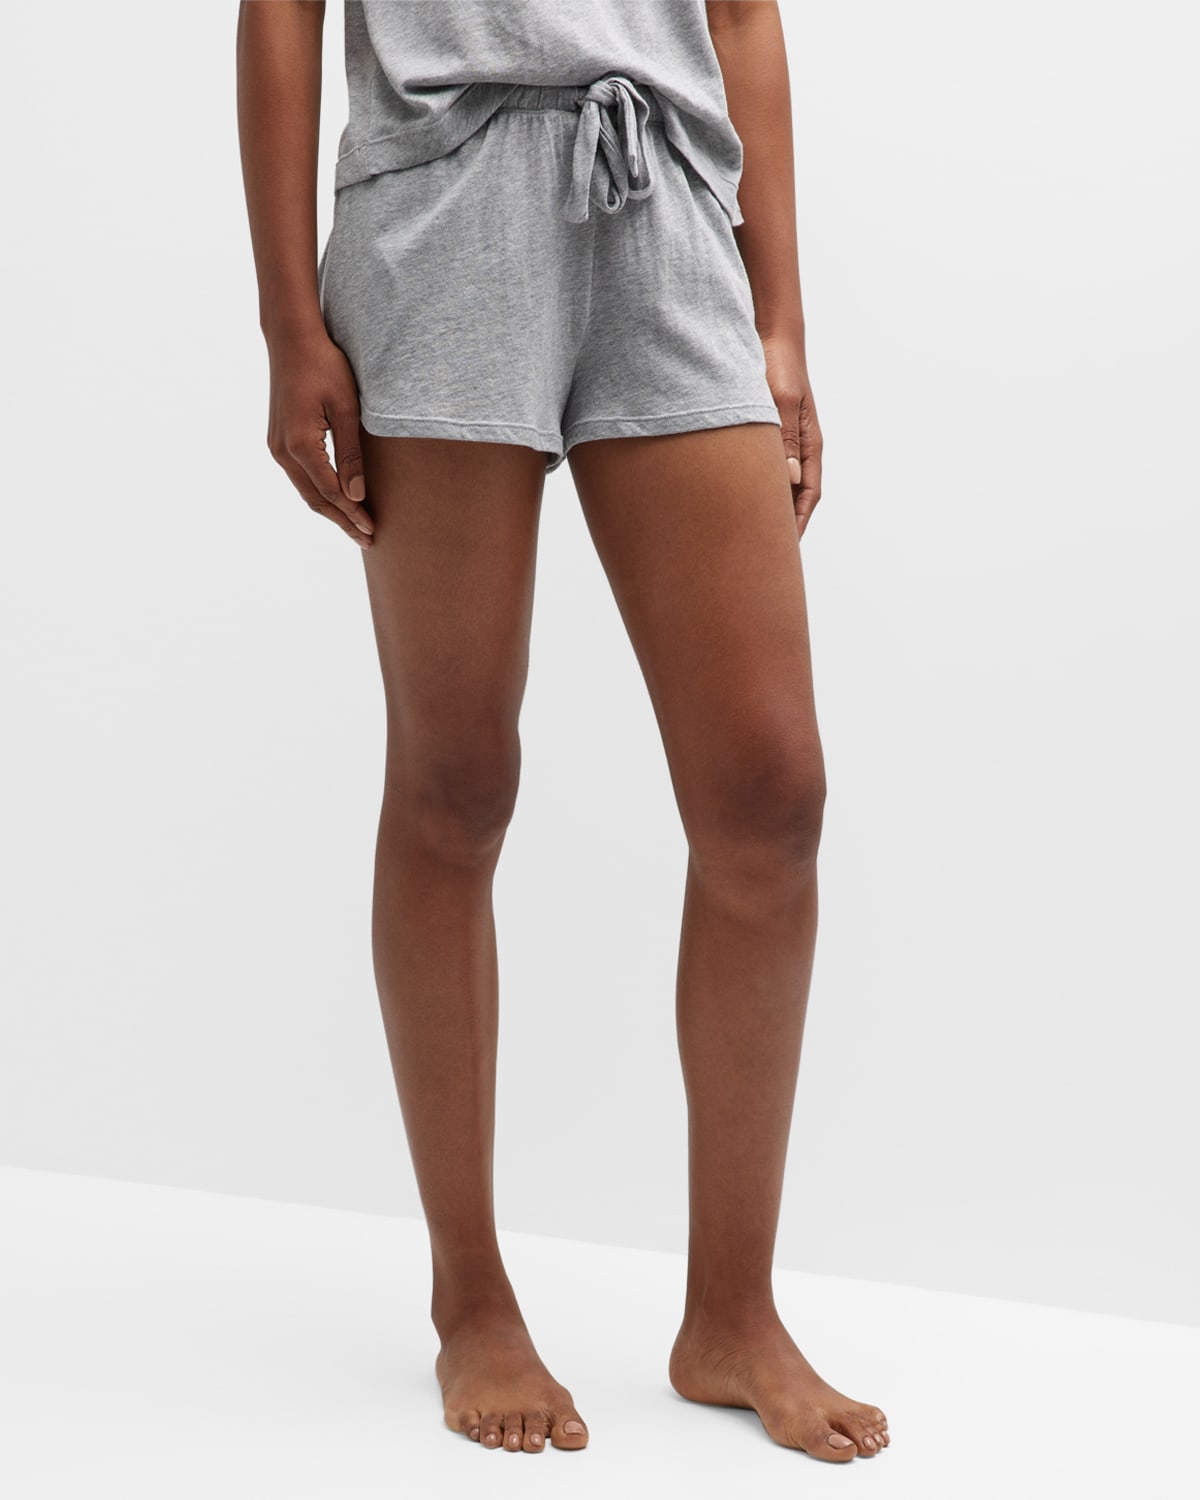 Aloe-Infused Cotton Shorts